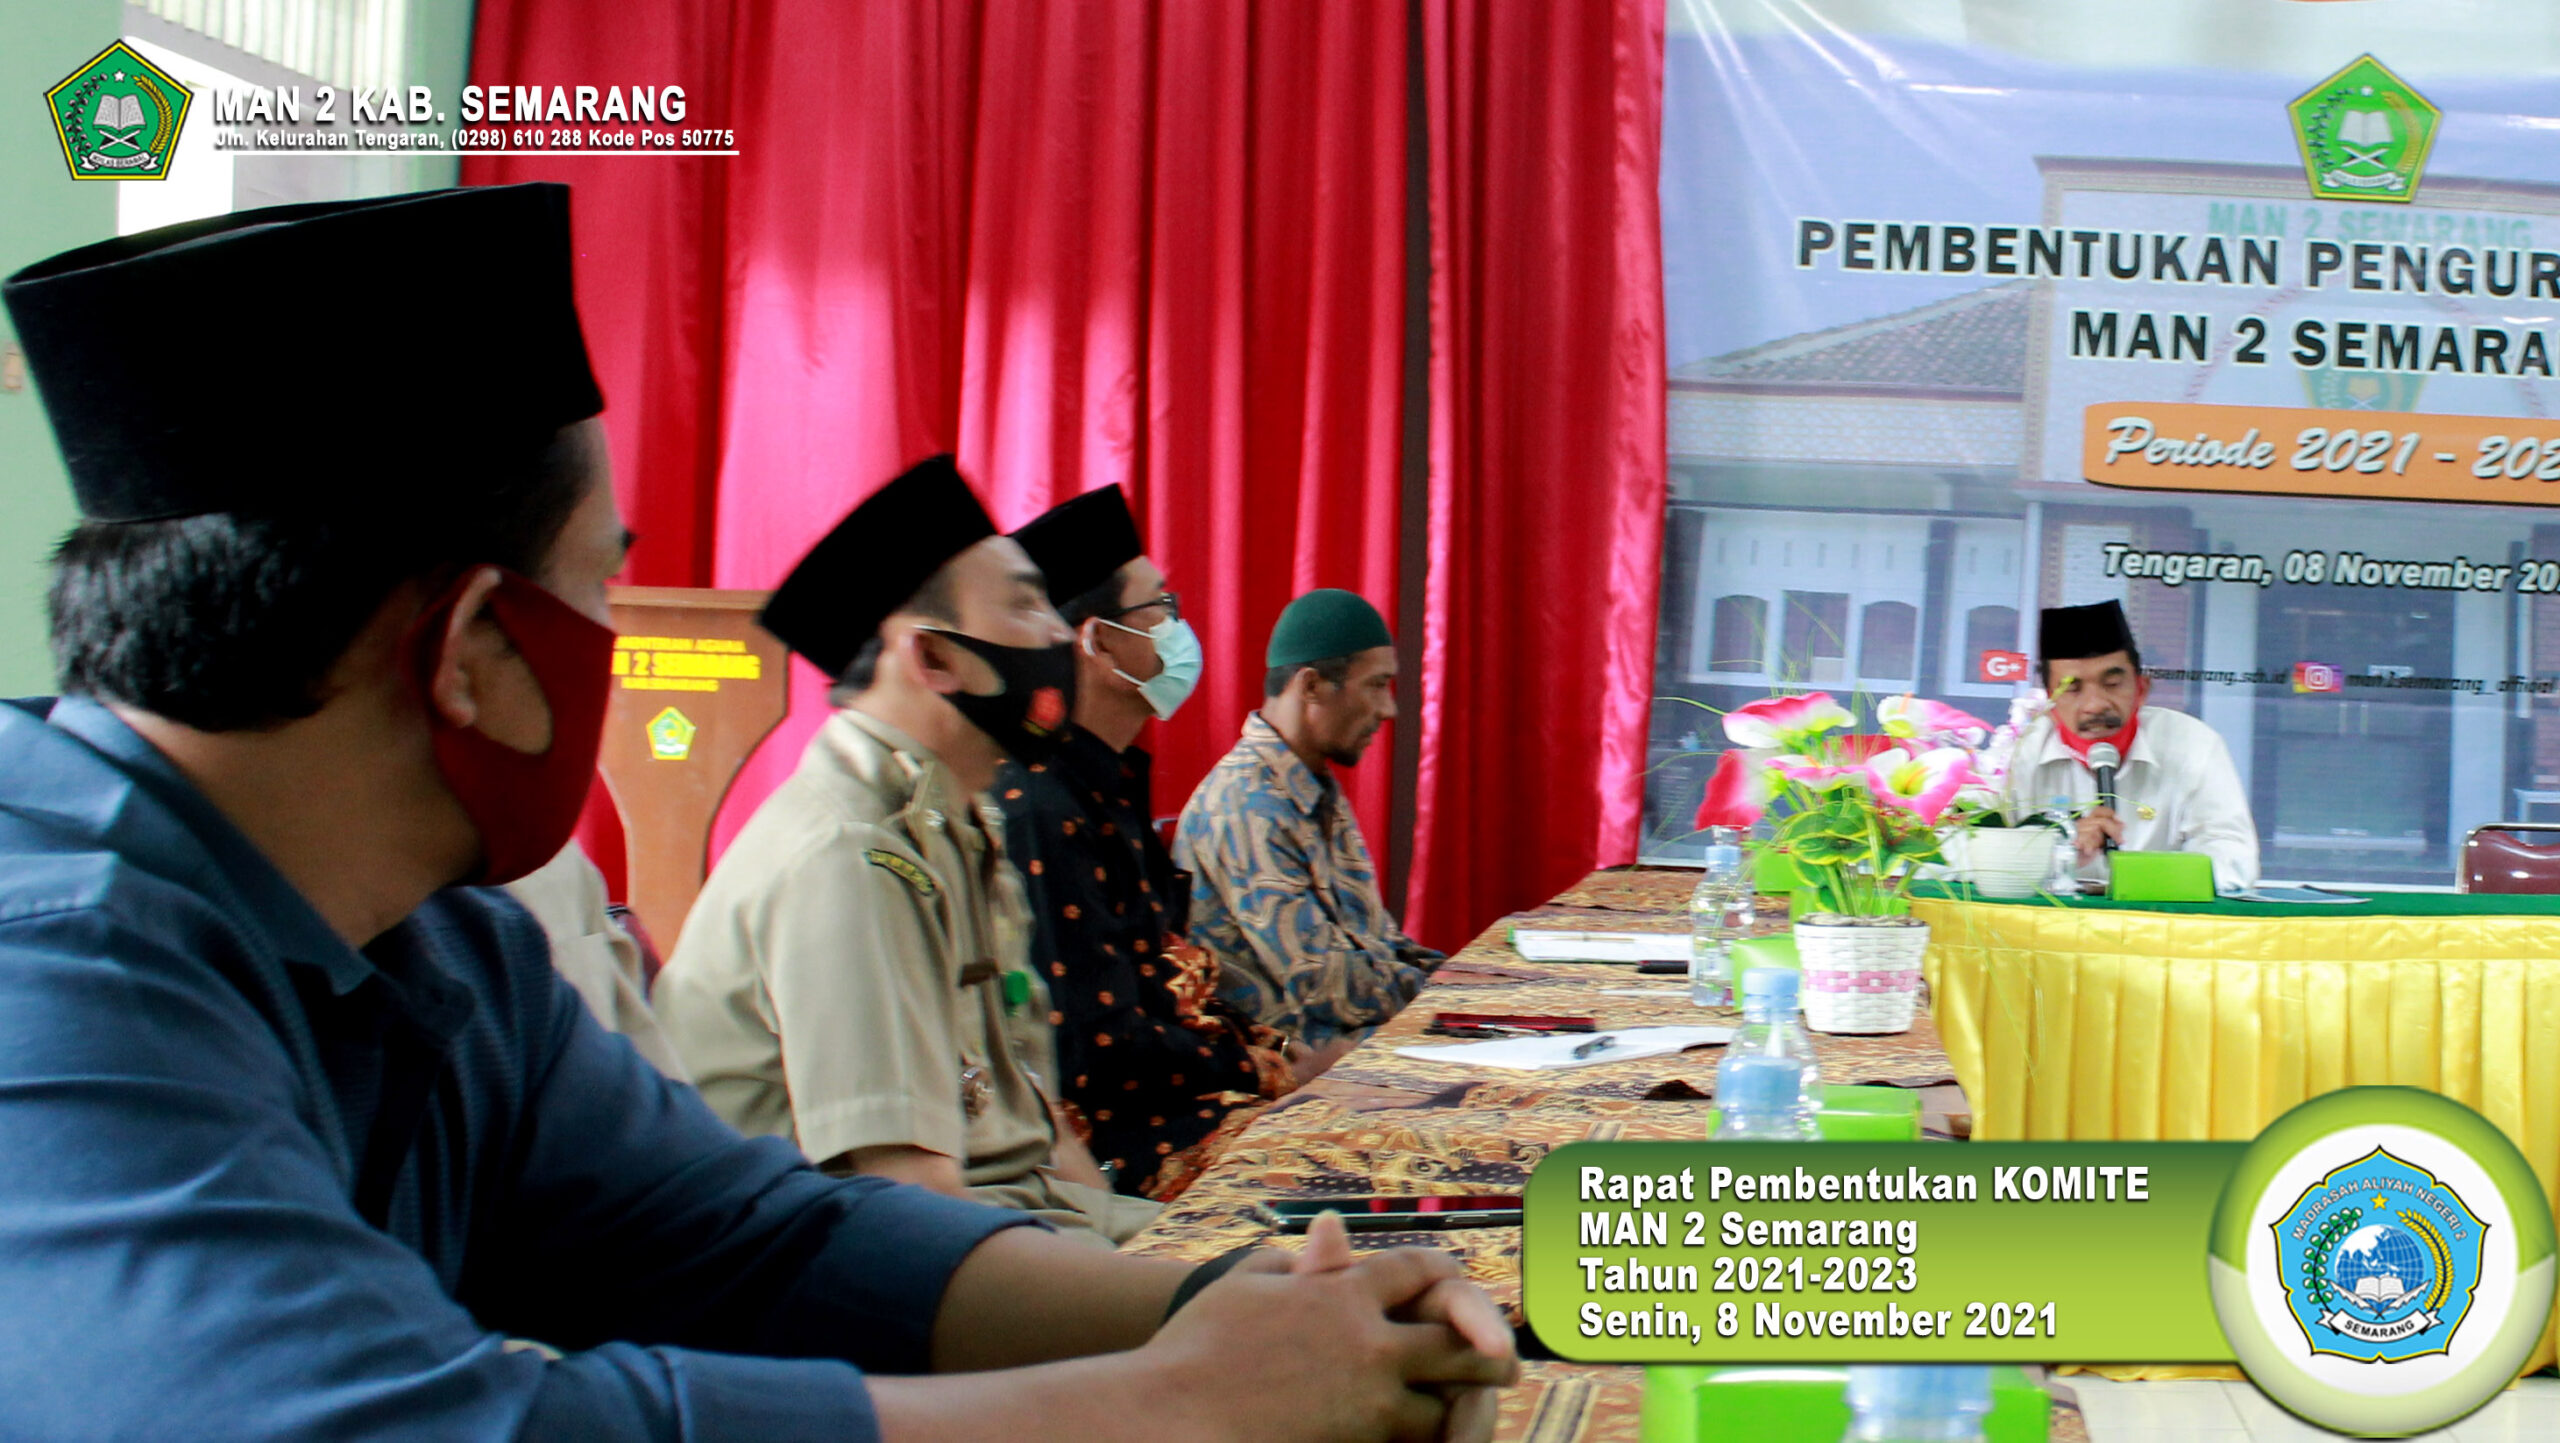 Rapat Pembentukan Pengurus Komite MAN 2 Semarang Periode 2021-2023